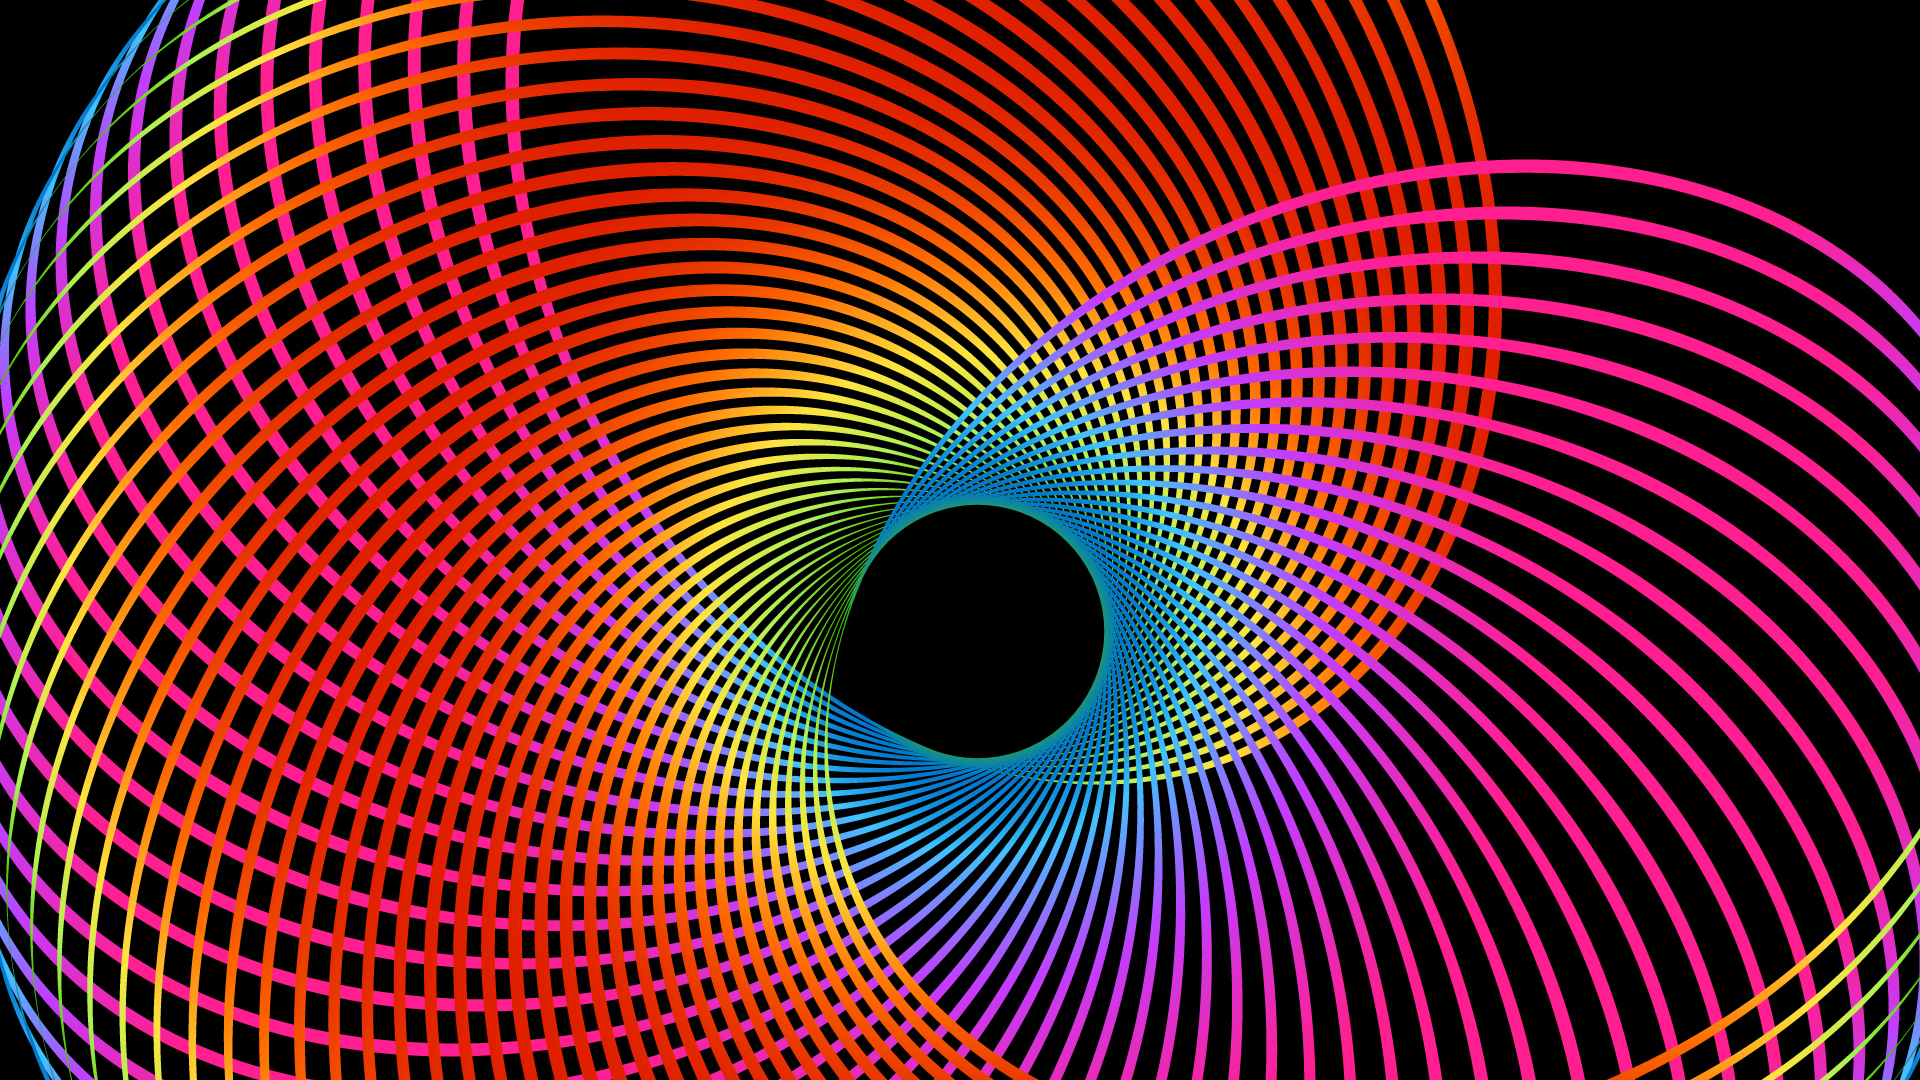 Spiral line turning background image free material Desktop